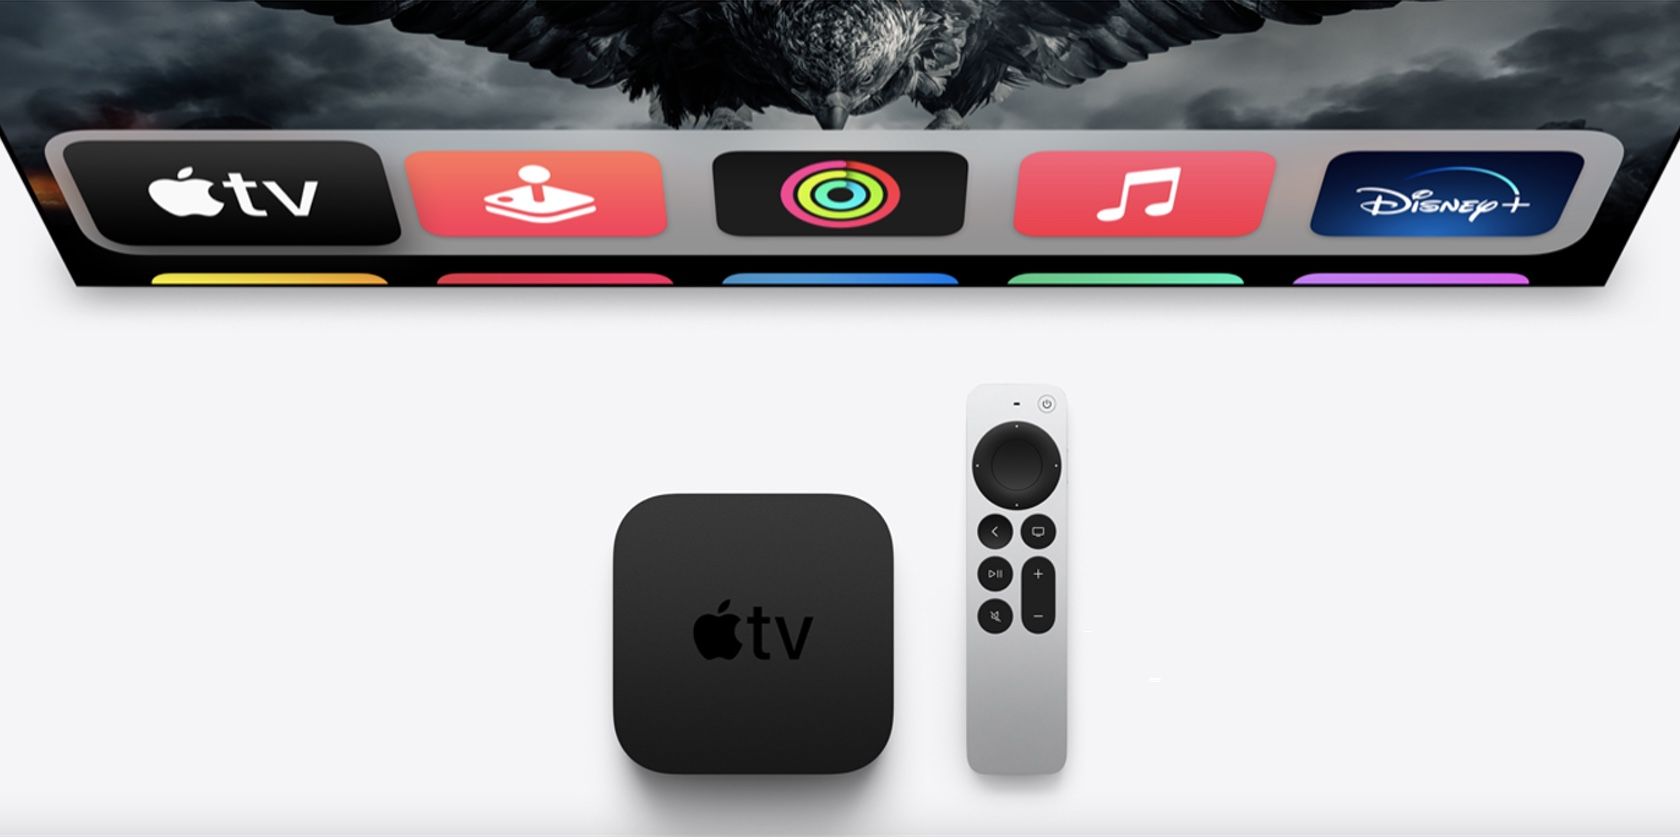 The second-generation Apple TV 4K